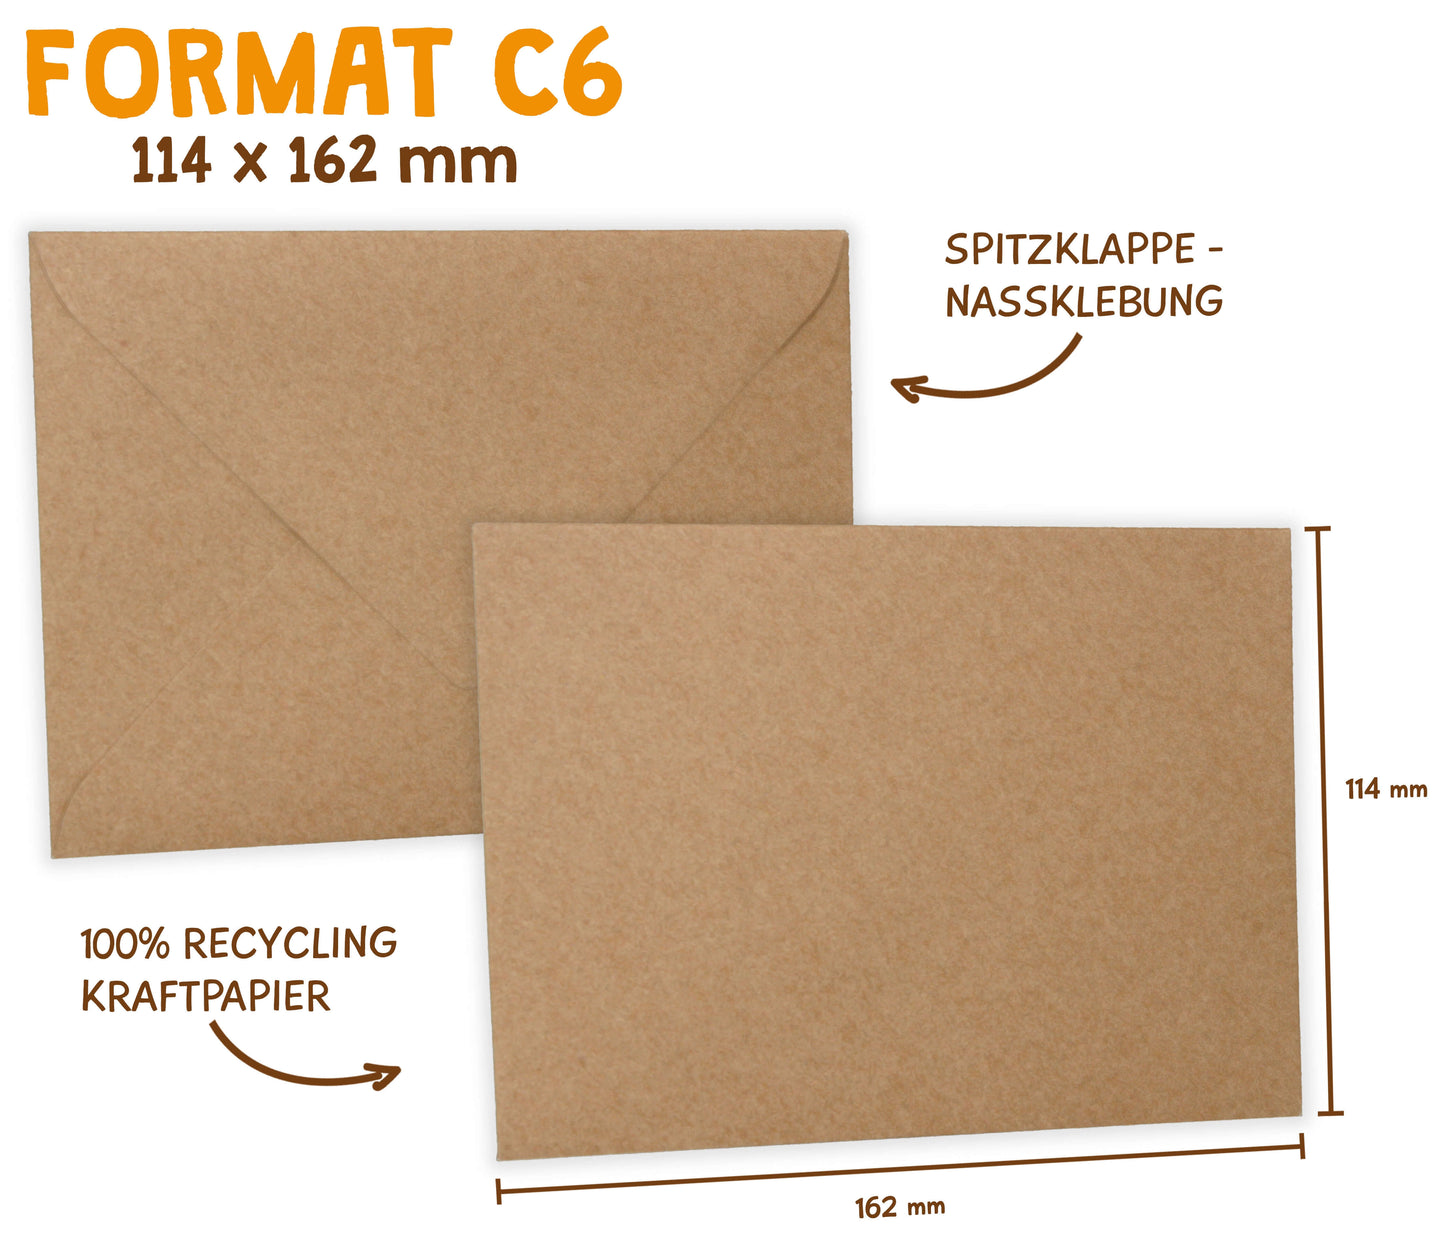 Briefumschlag braunes Recycling Kraftpapier: DIN C6 Maße 114 mal 162 Millimeter